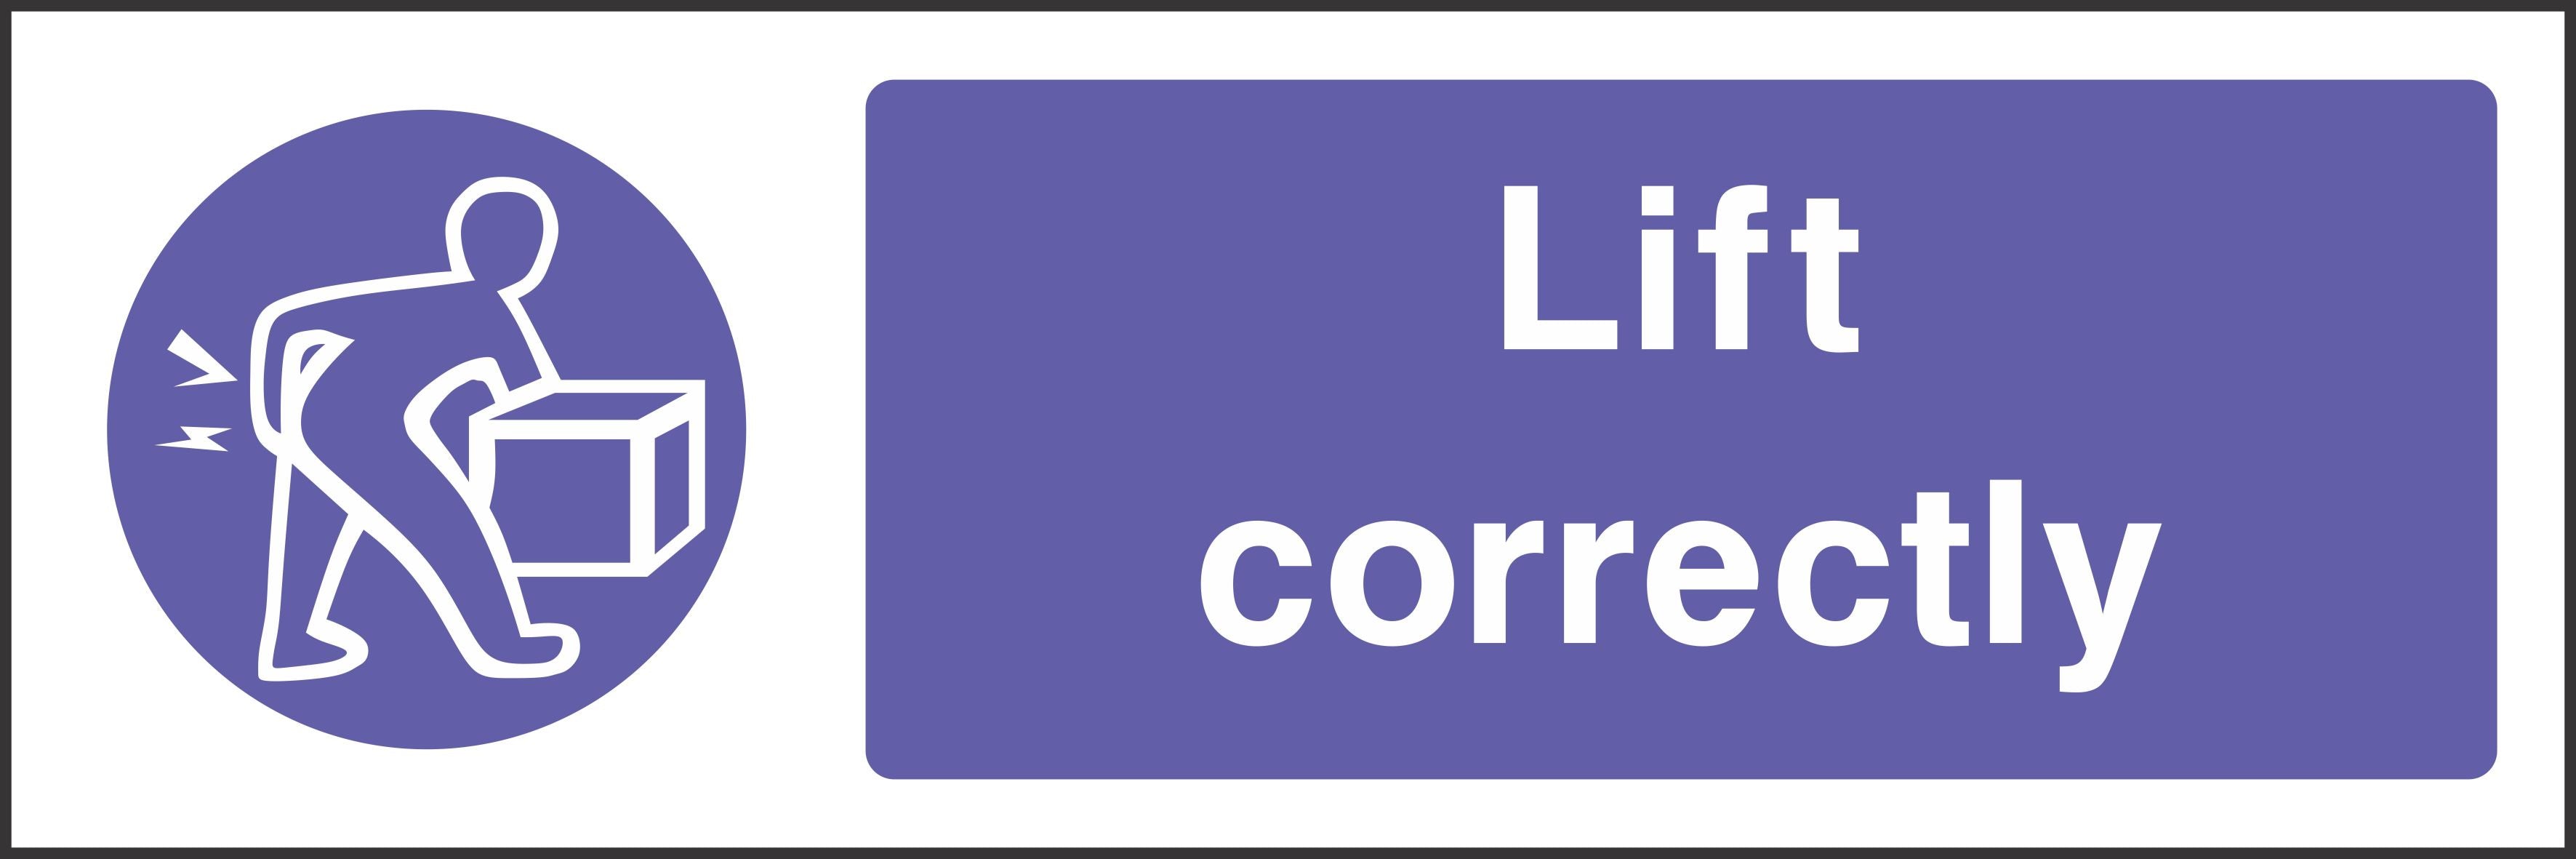 lift correctly sign